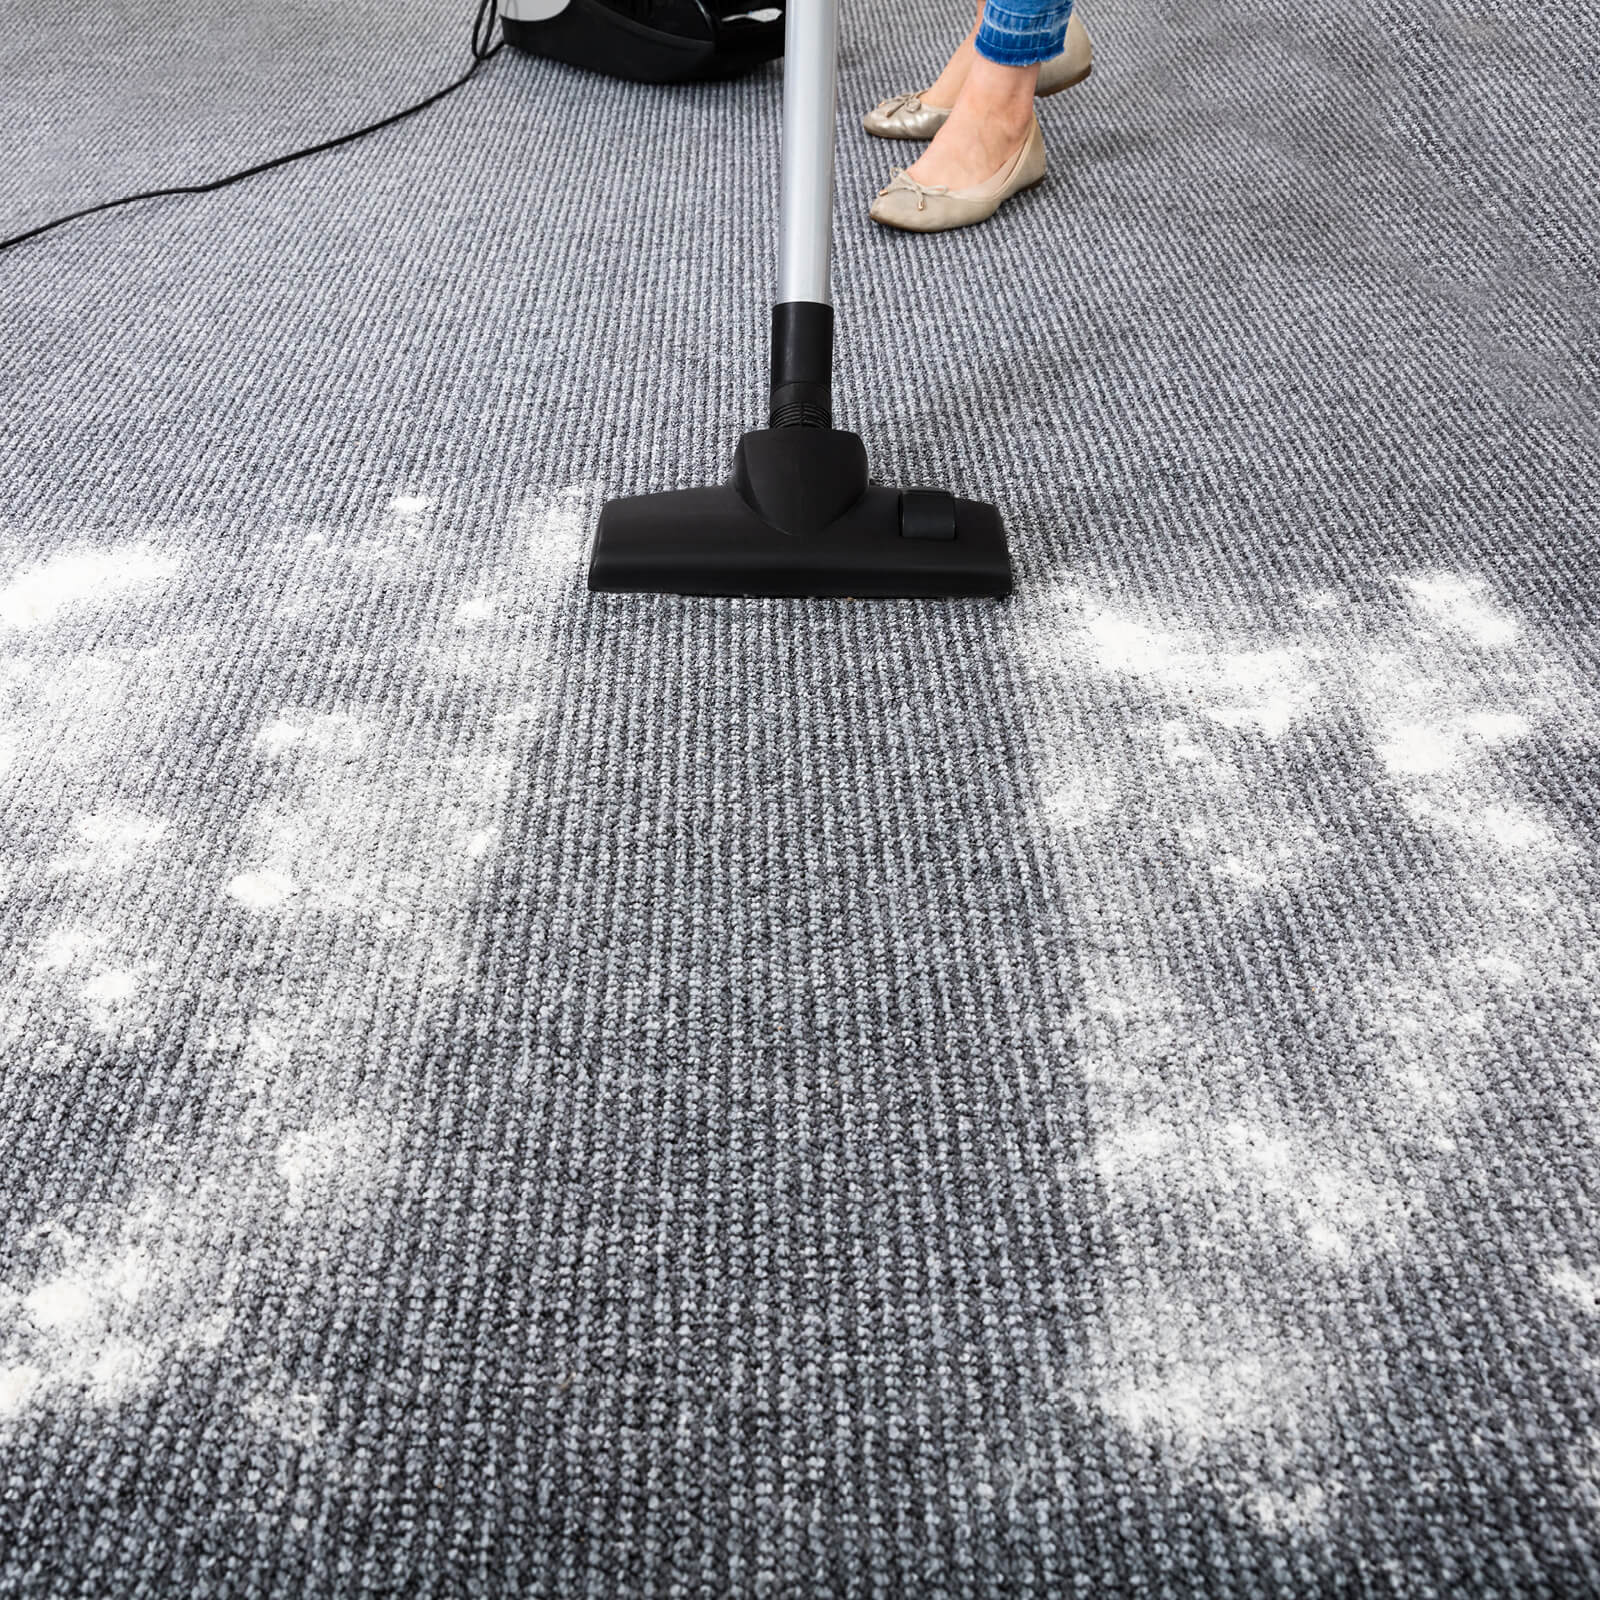 Carpet cleaning | PDJ Flooring